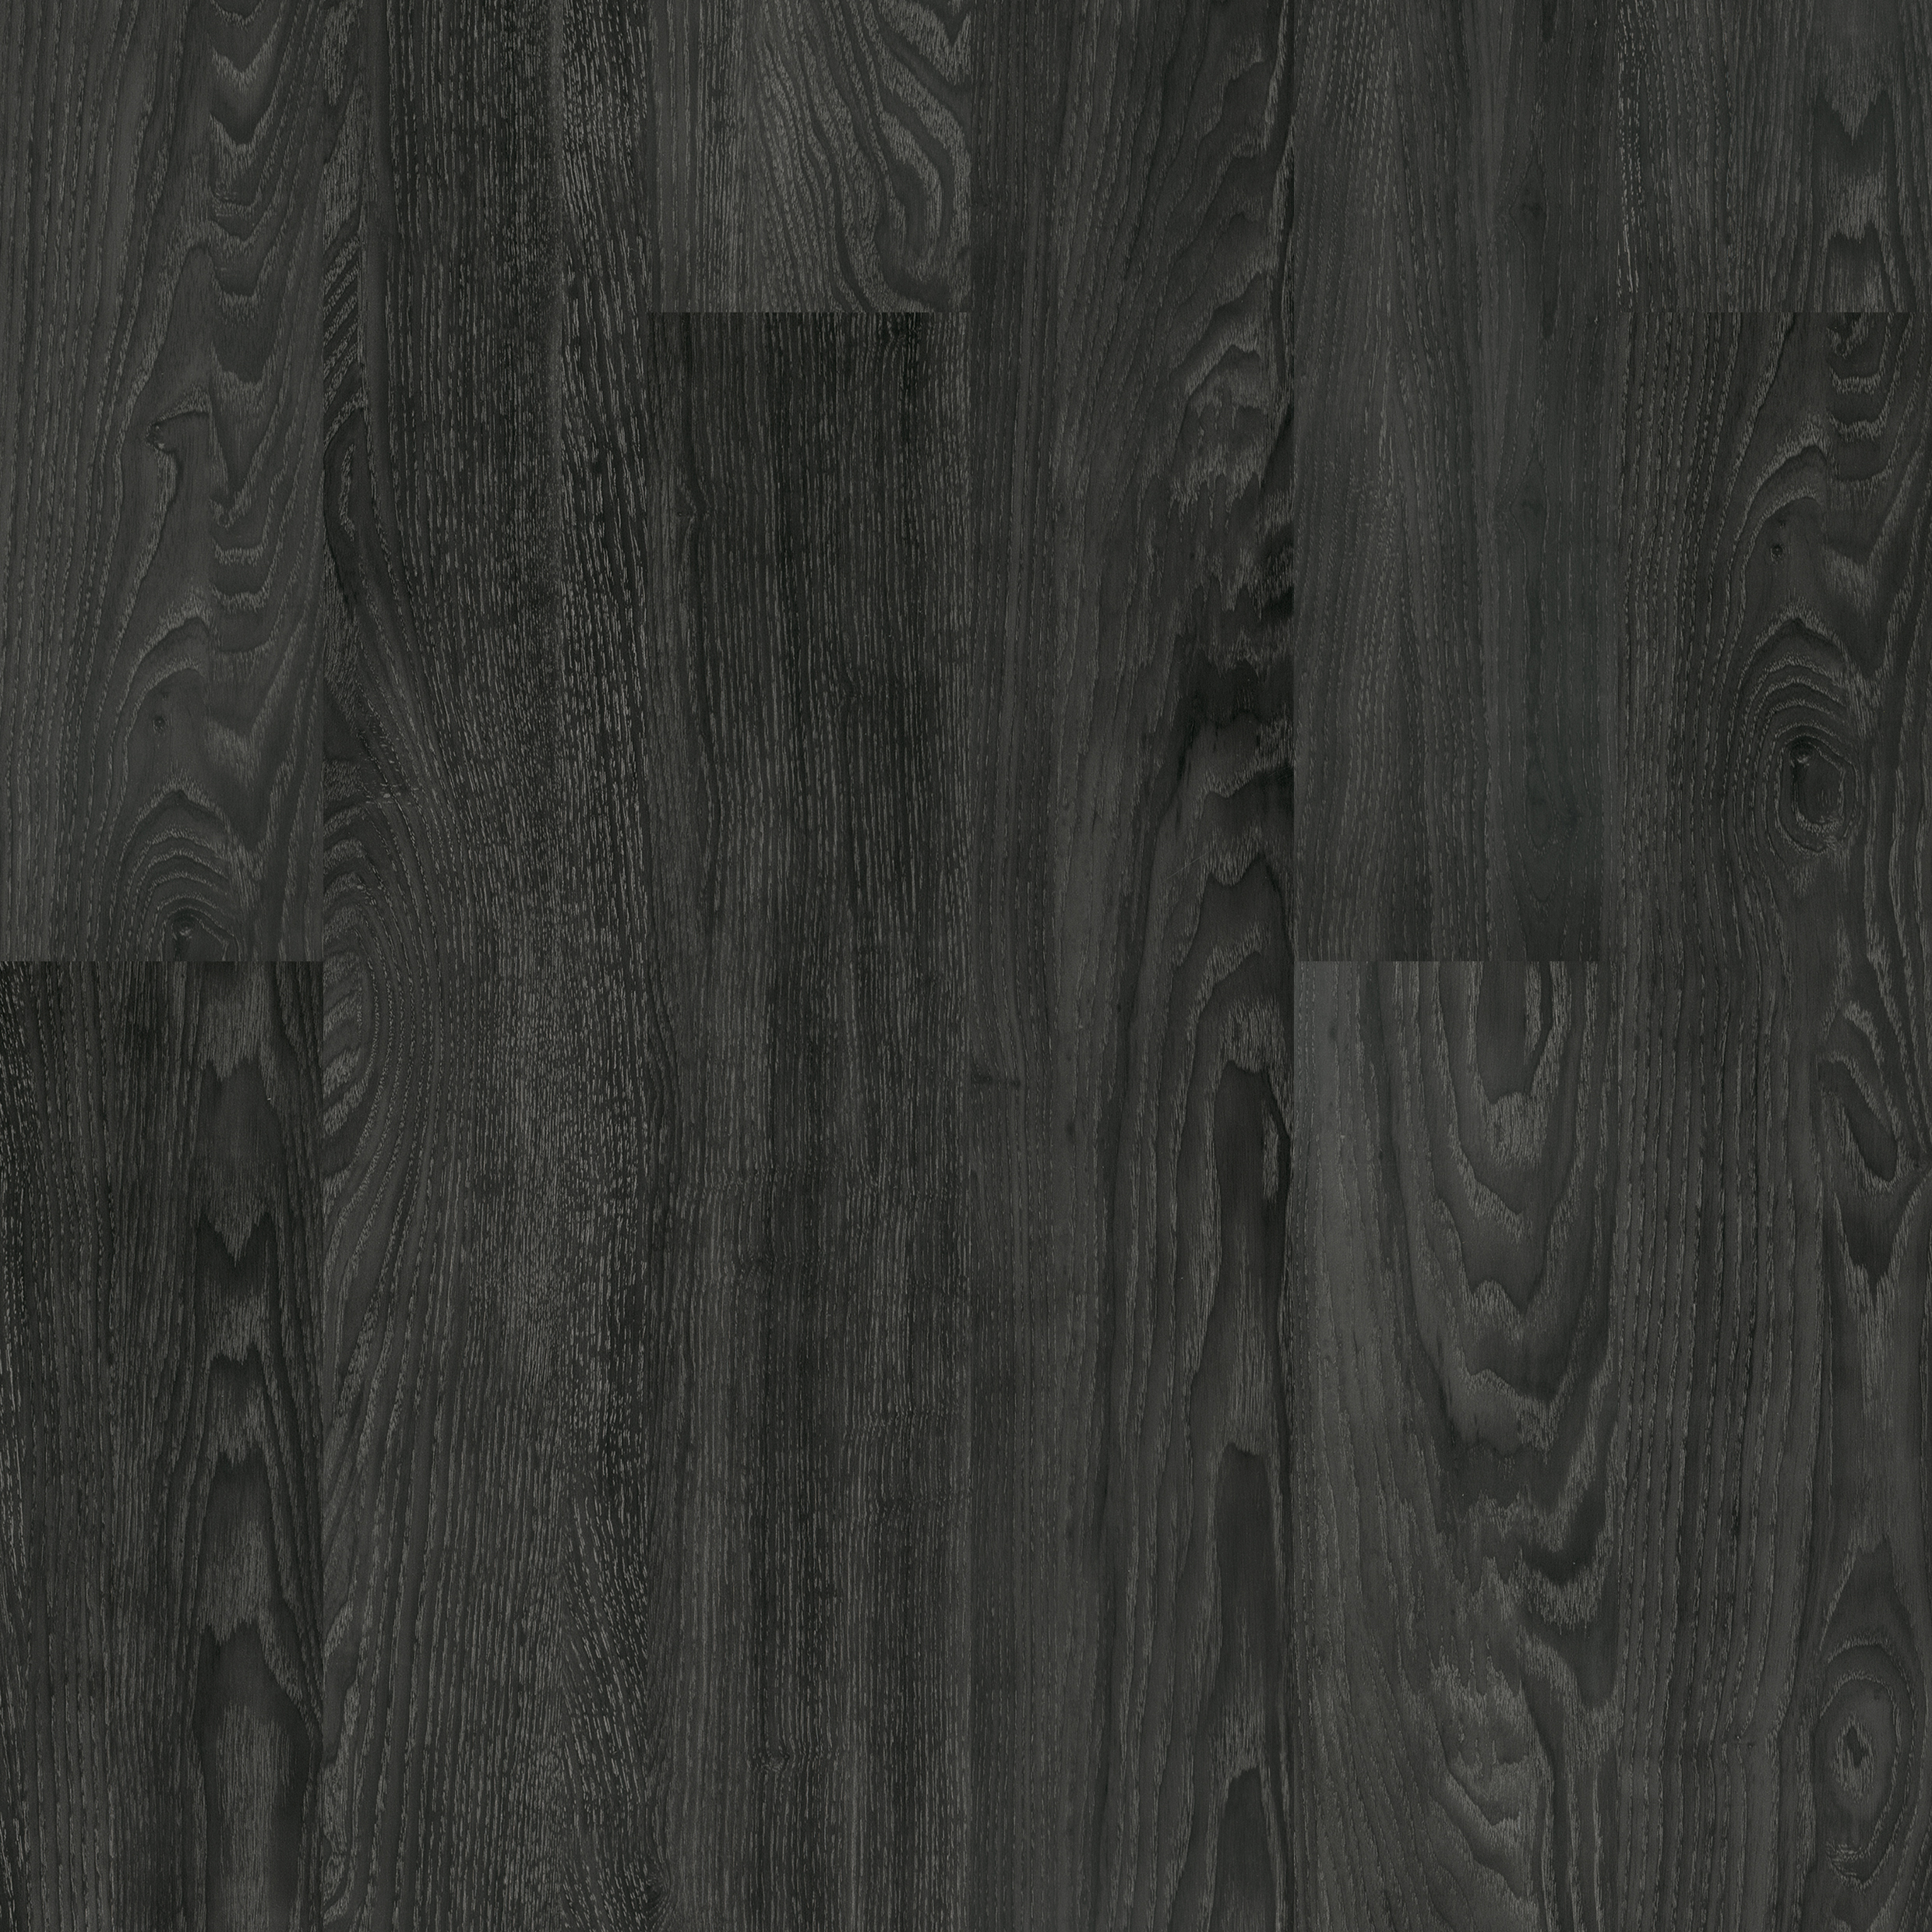 Image of Saunders Black Elm SPC Flooring with Integrated Underlay - 2.167m2